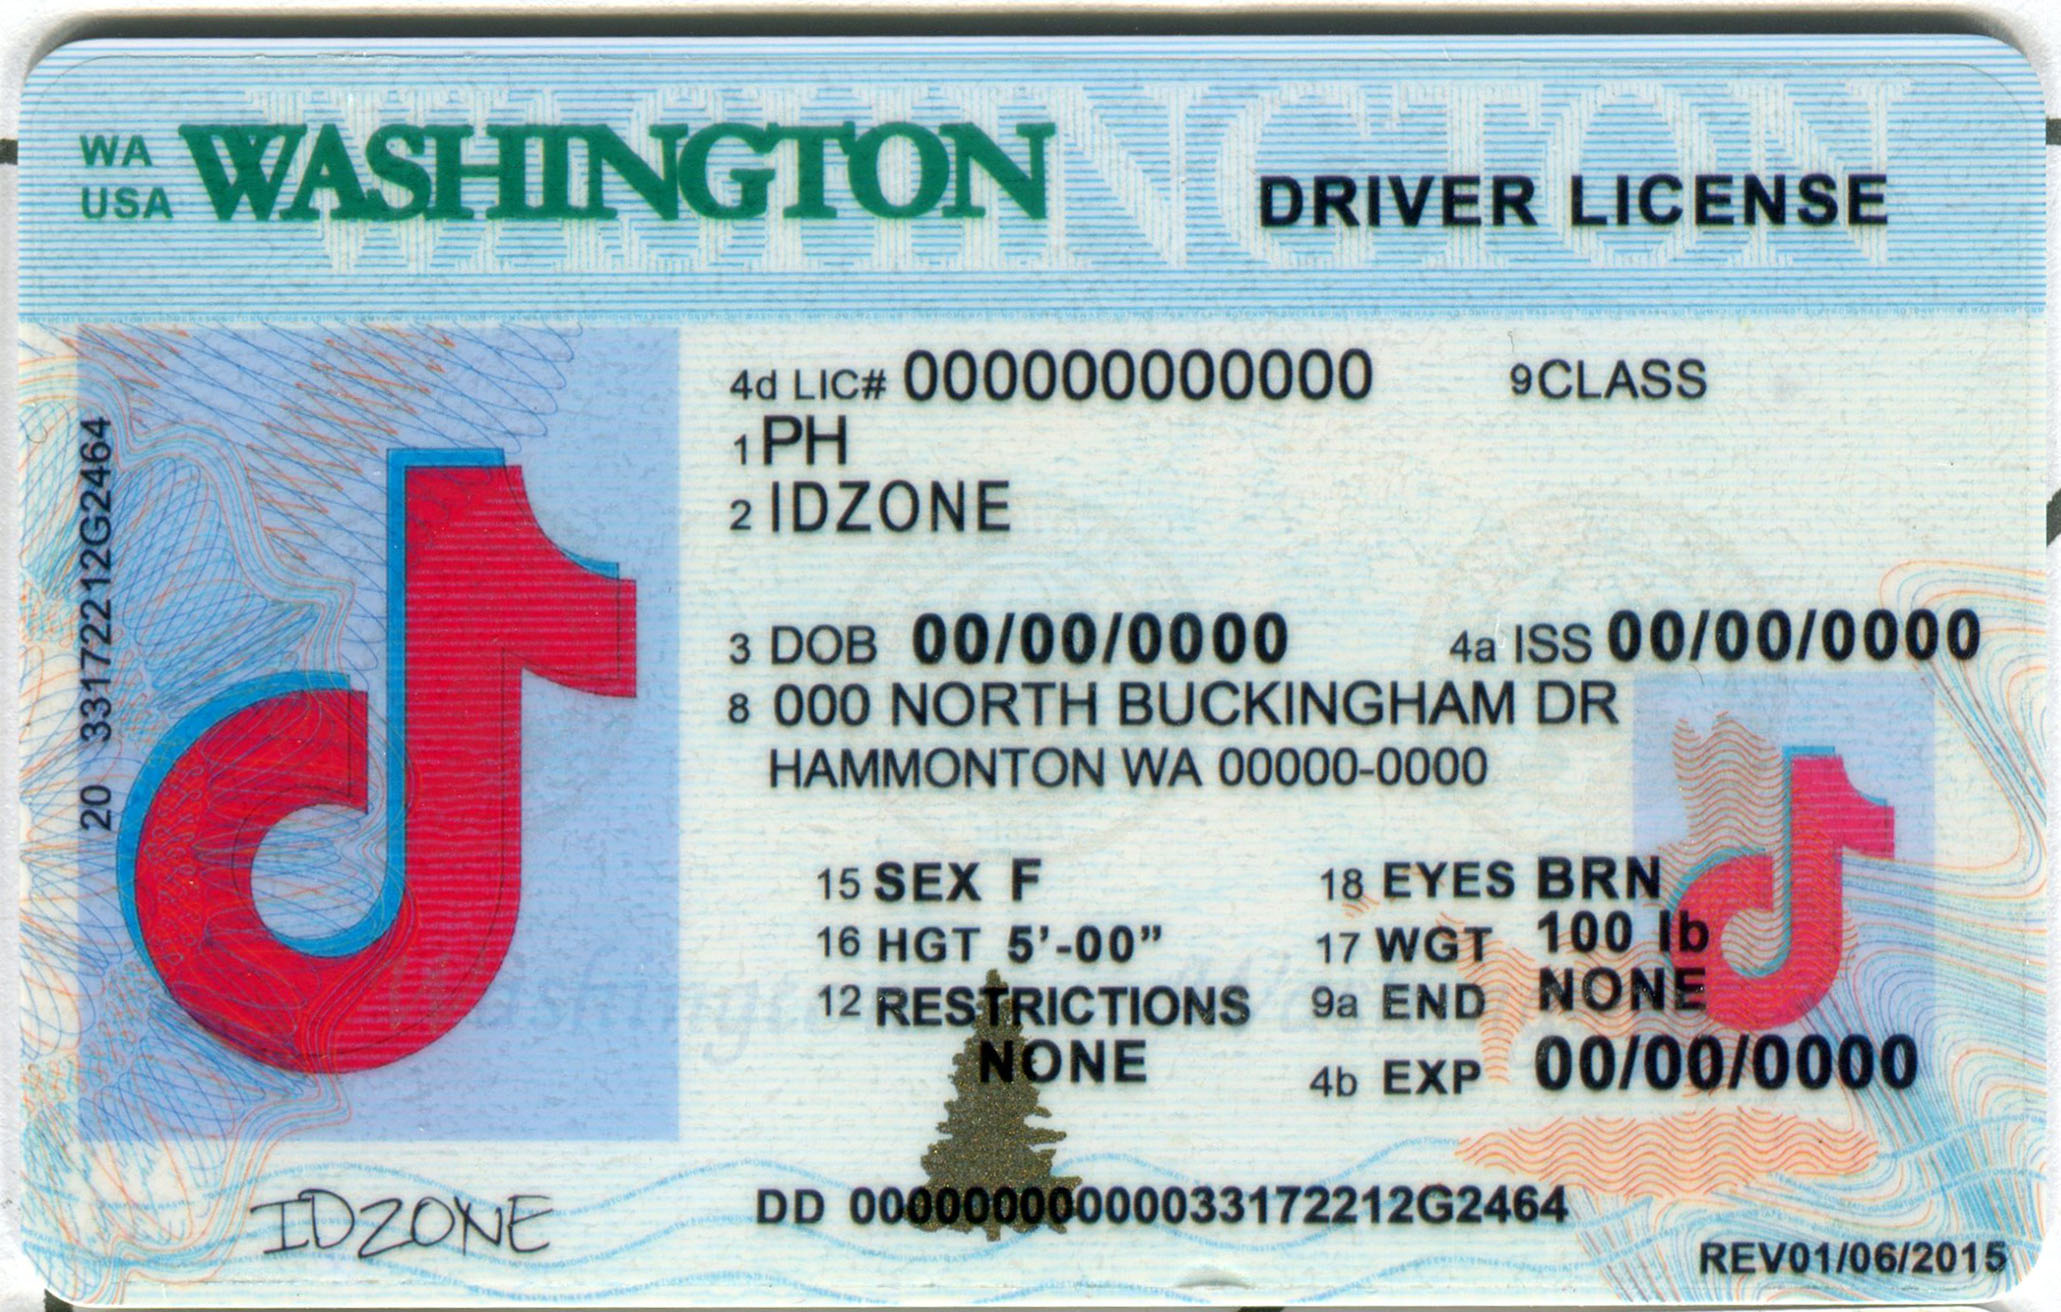 WASHINGTON-New fake id